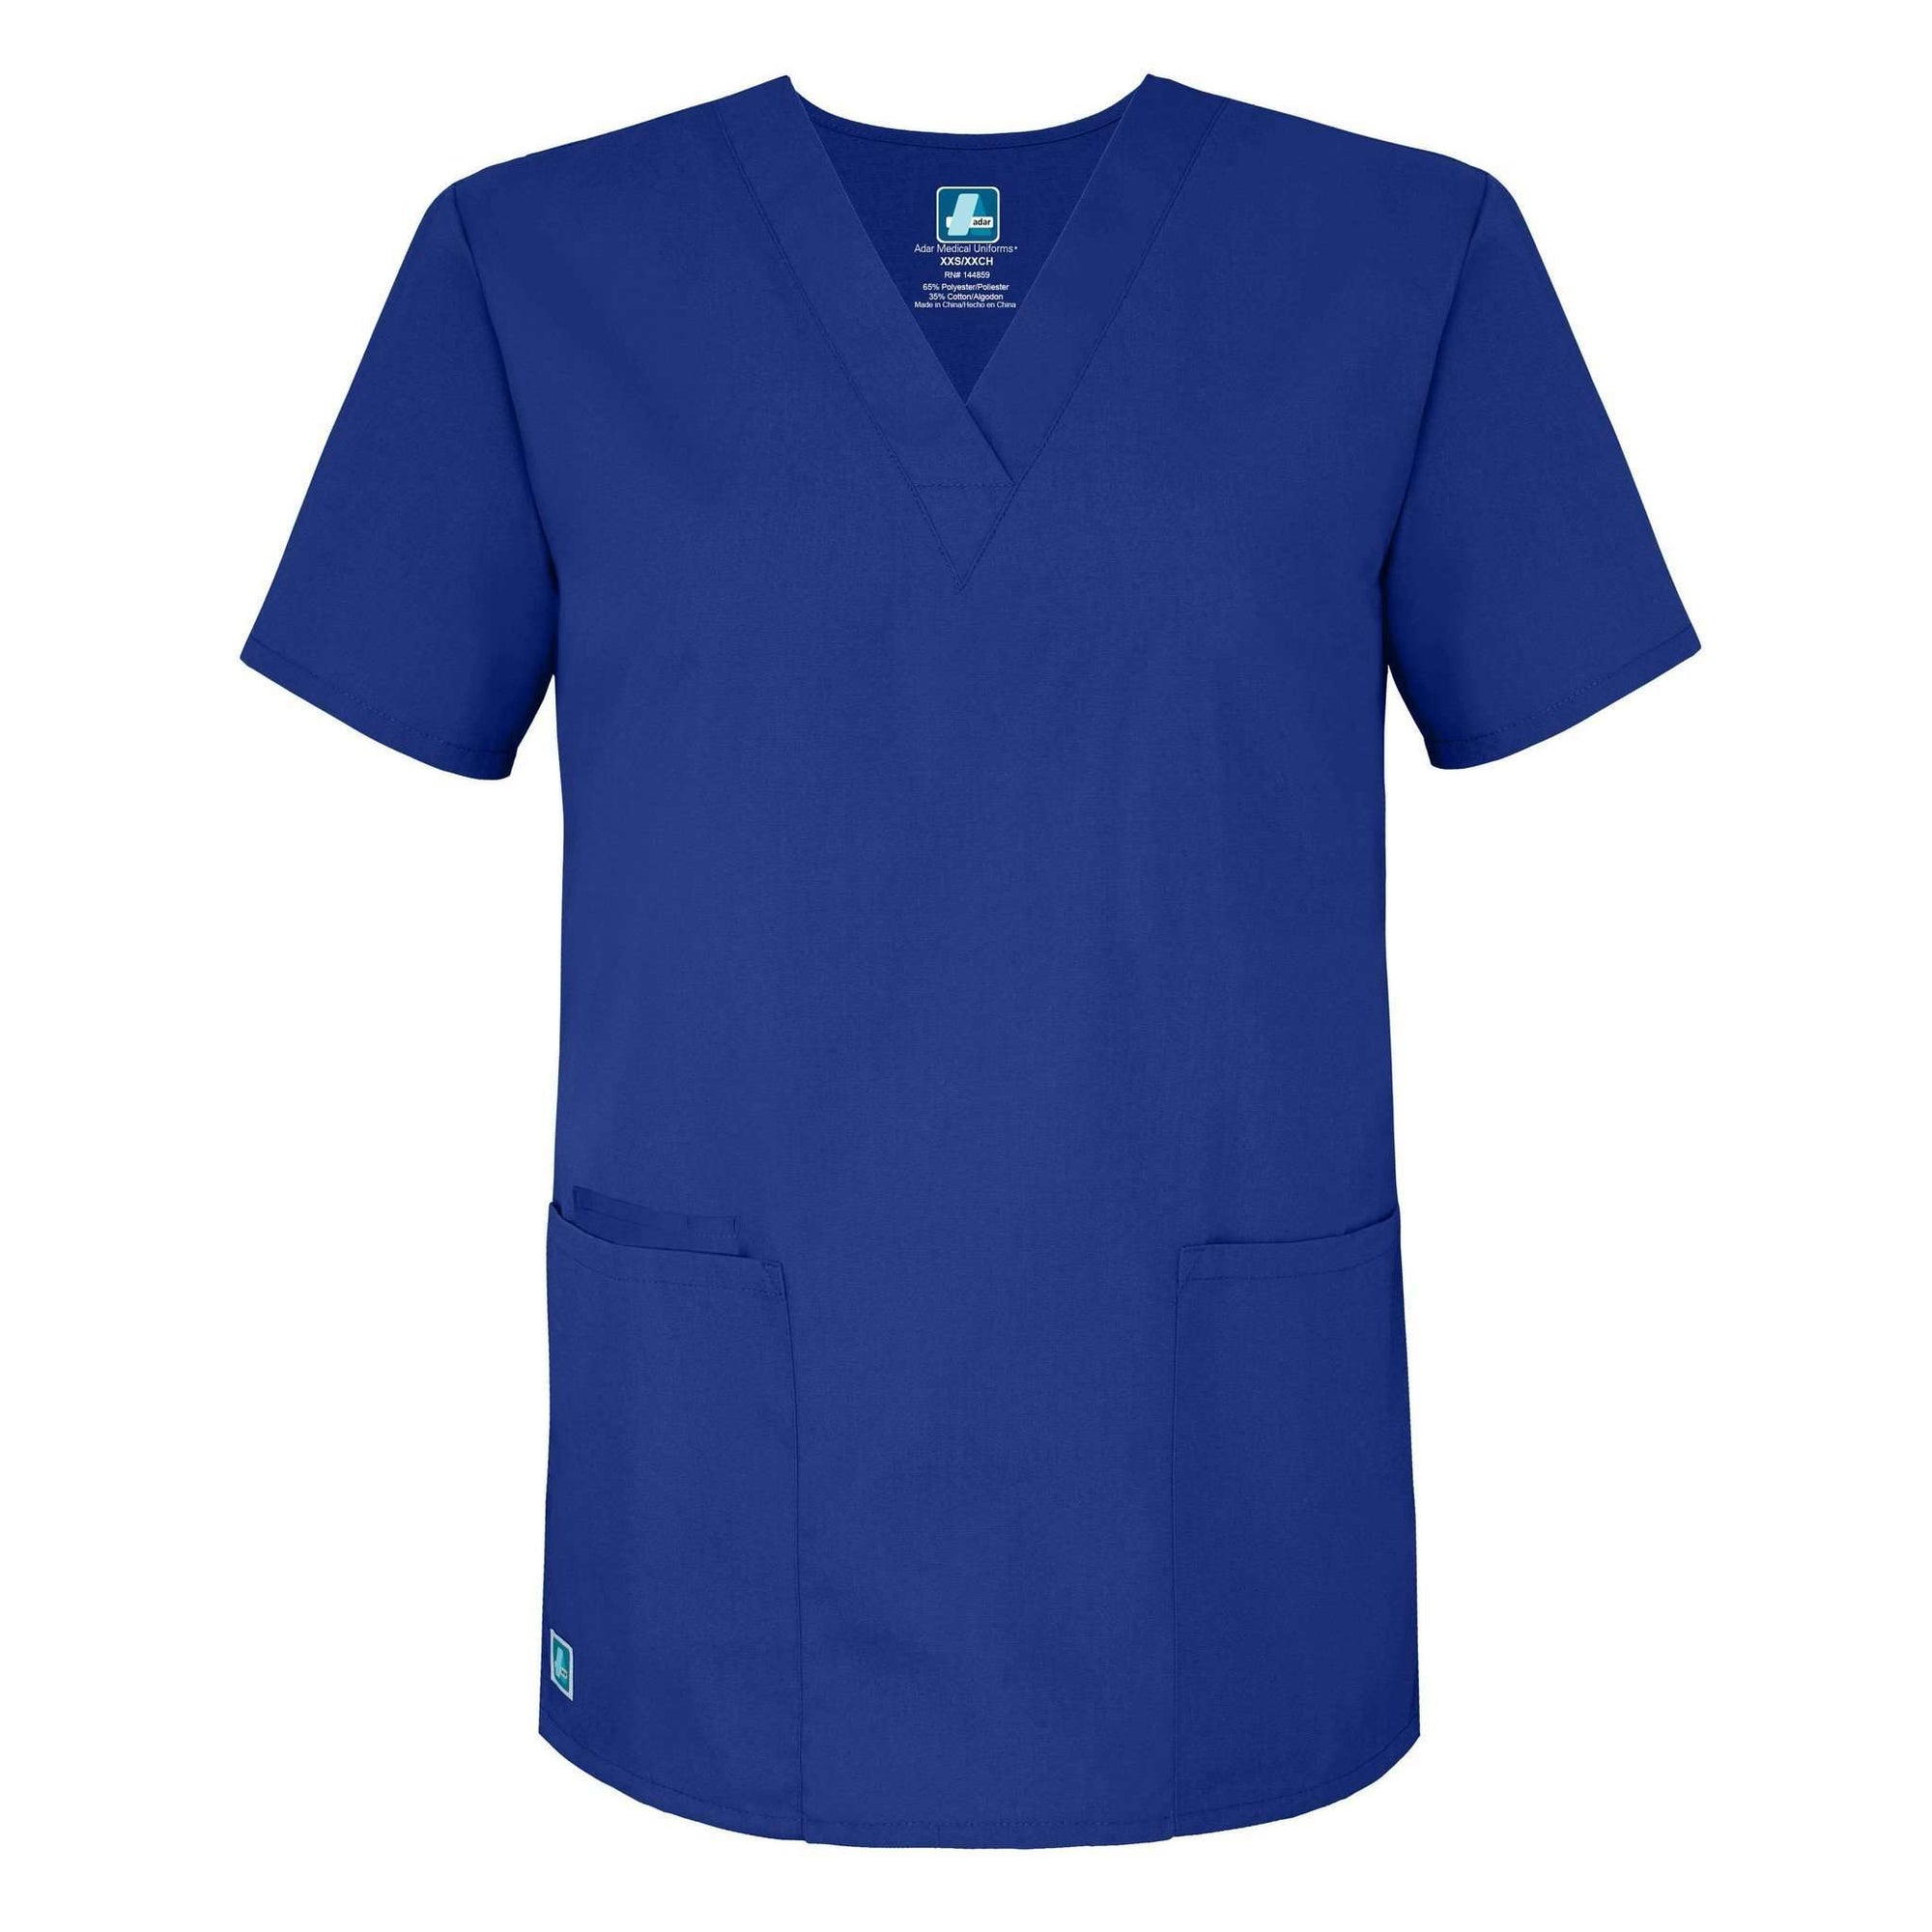  Adar - uniforms Medical Uniform Tops uniforms online Adar Universal Unisex V-Neck 2 Pocket Scrub Top Royal Blue L - SchoolUniforms.com